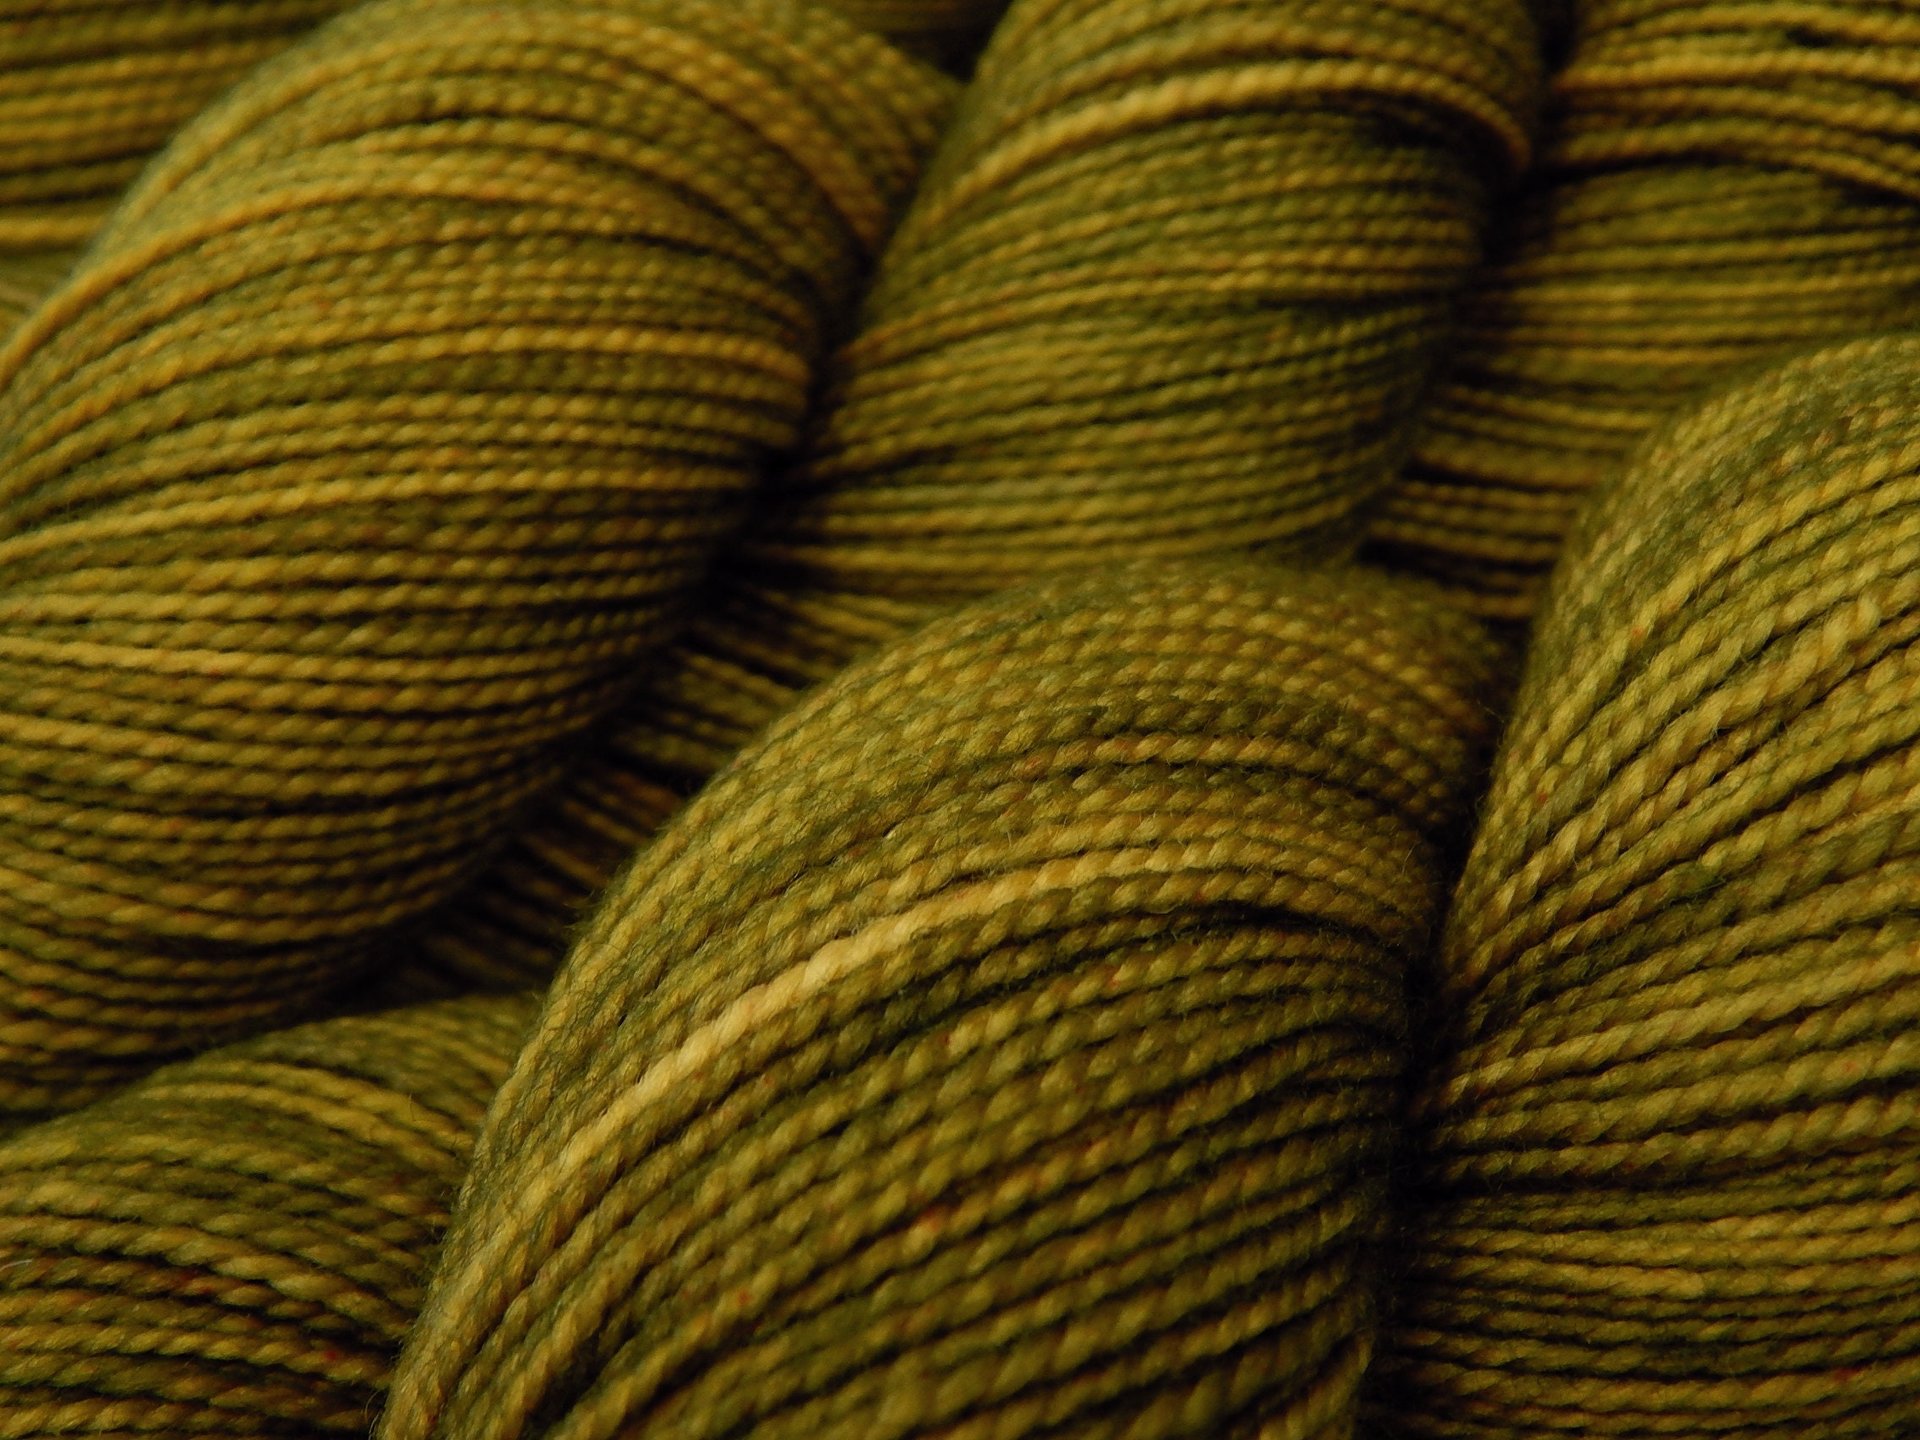 Fingering Weight Hand Dyed Yarn, 100% Superwash Merino Wool Sock Yarn - Olive Oil Tonal - Soft Washable Knitting Yarns, Gift for Knitter